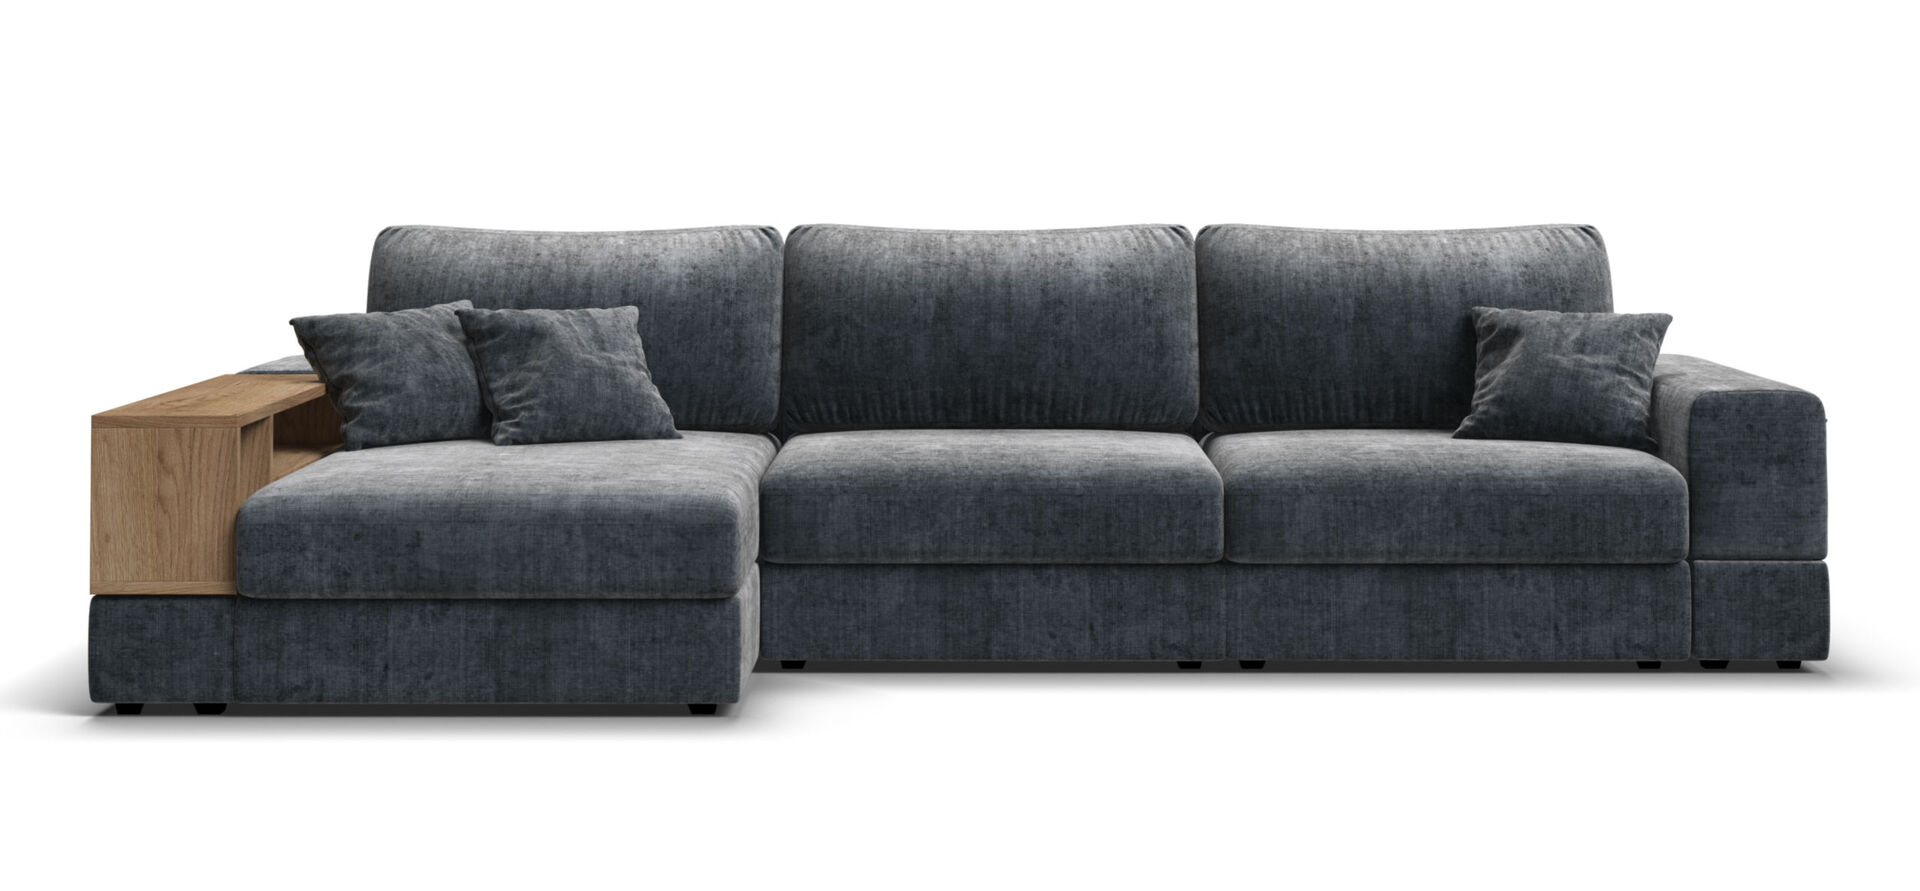 Угловой диван-кровать BOSS MODOOL XL шенилл Gloss карбон